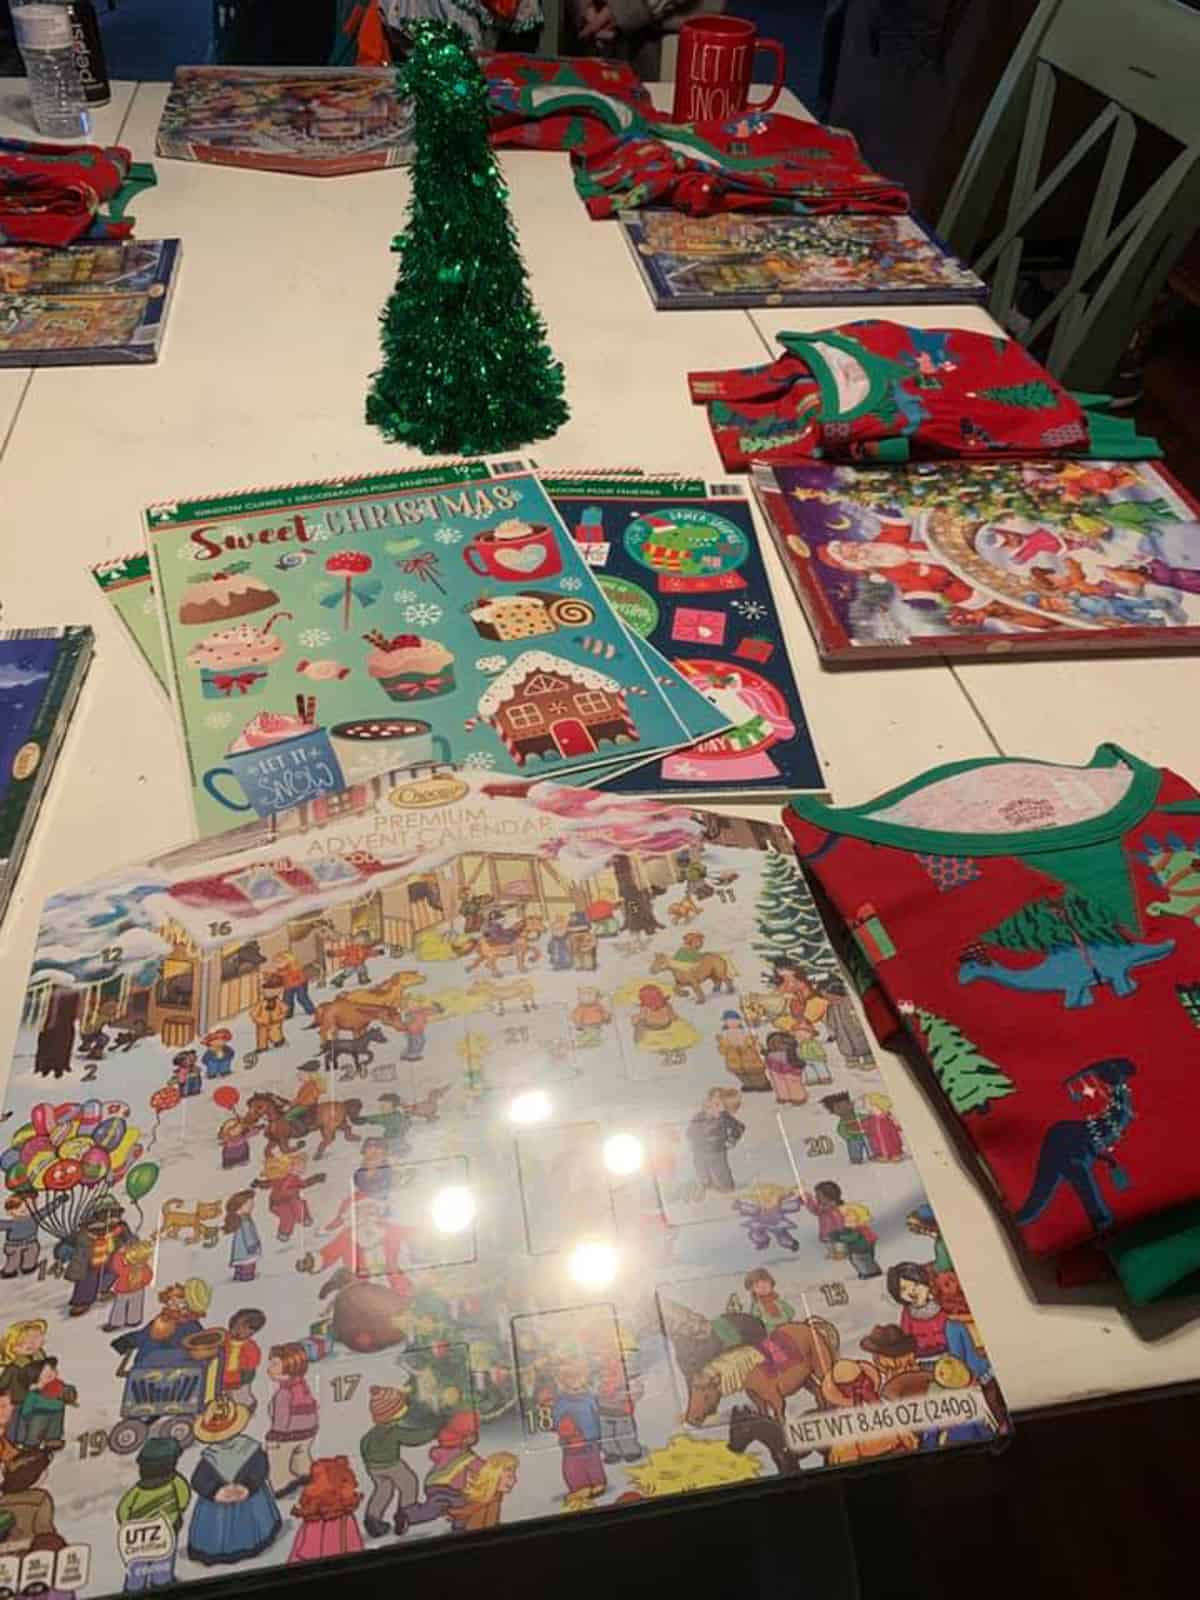 Christmas jigsaw puzzles on a table.